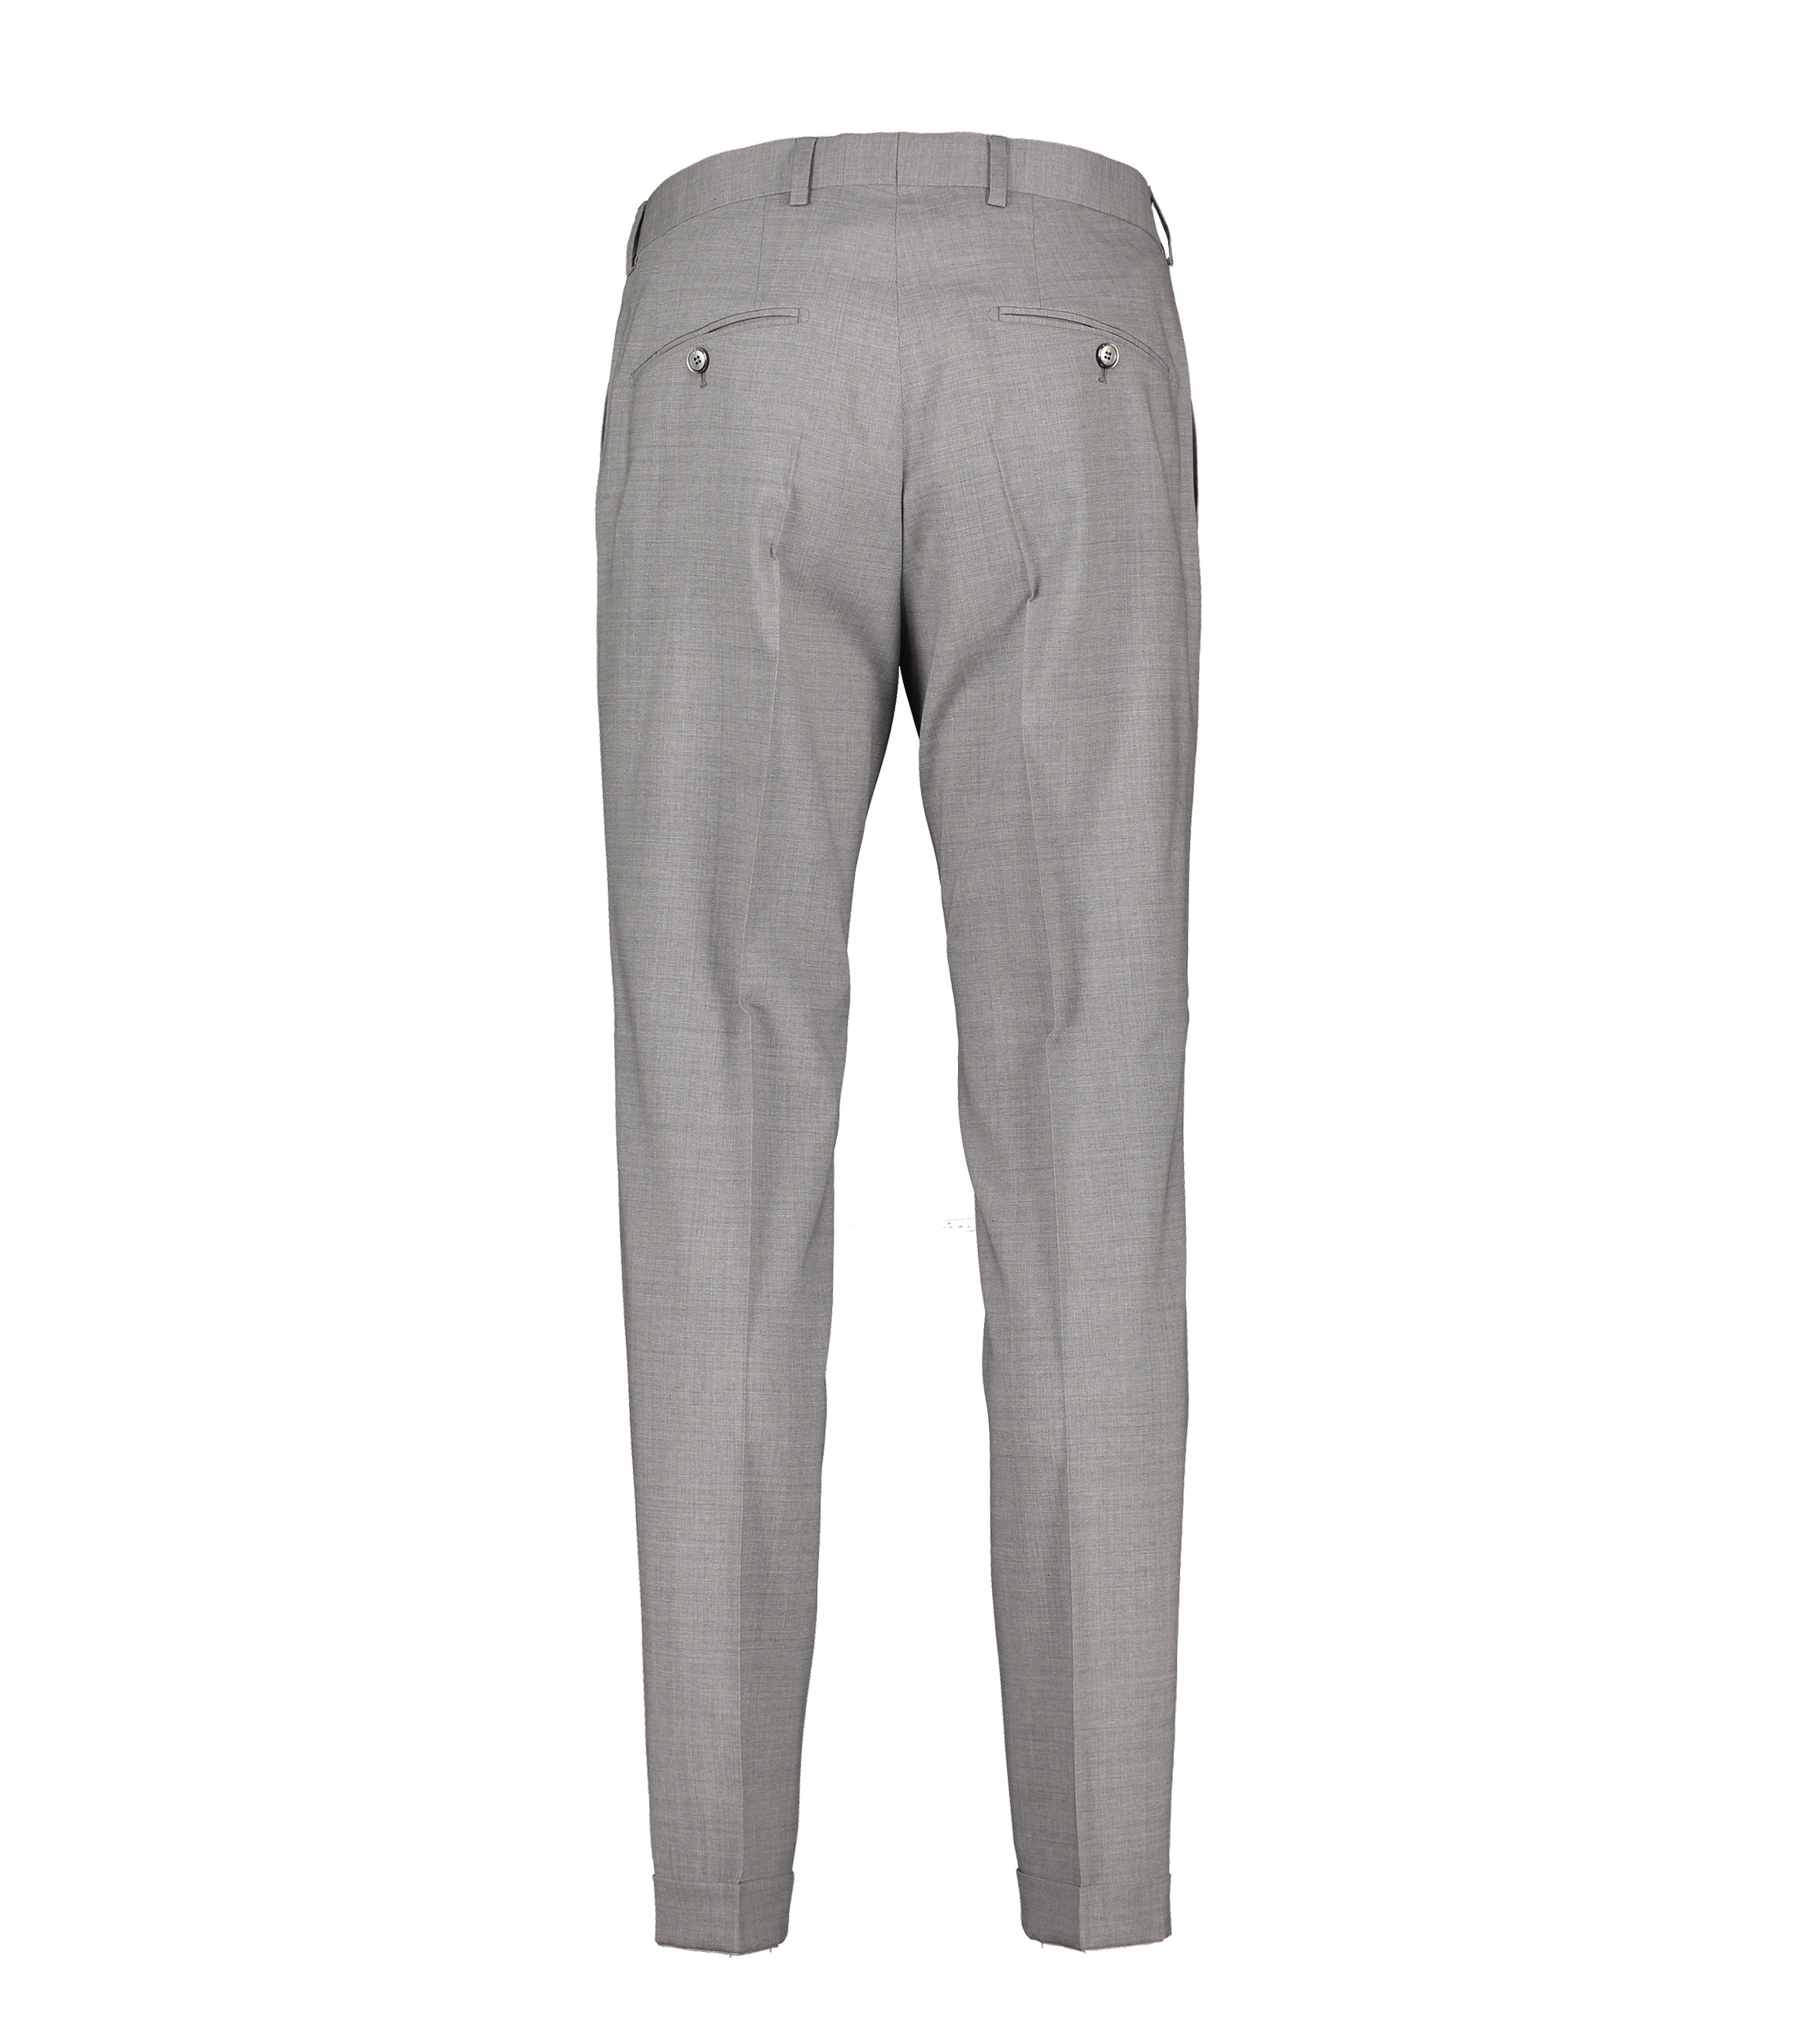 Alex Light Grey Trousers